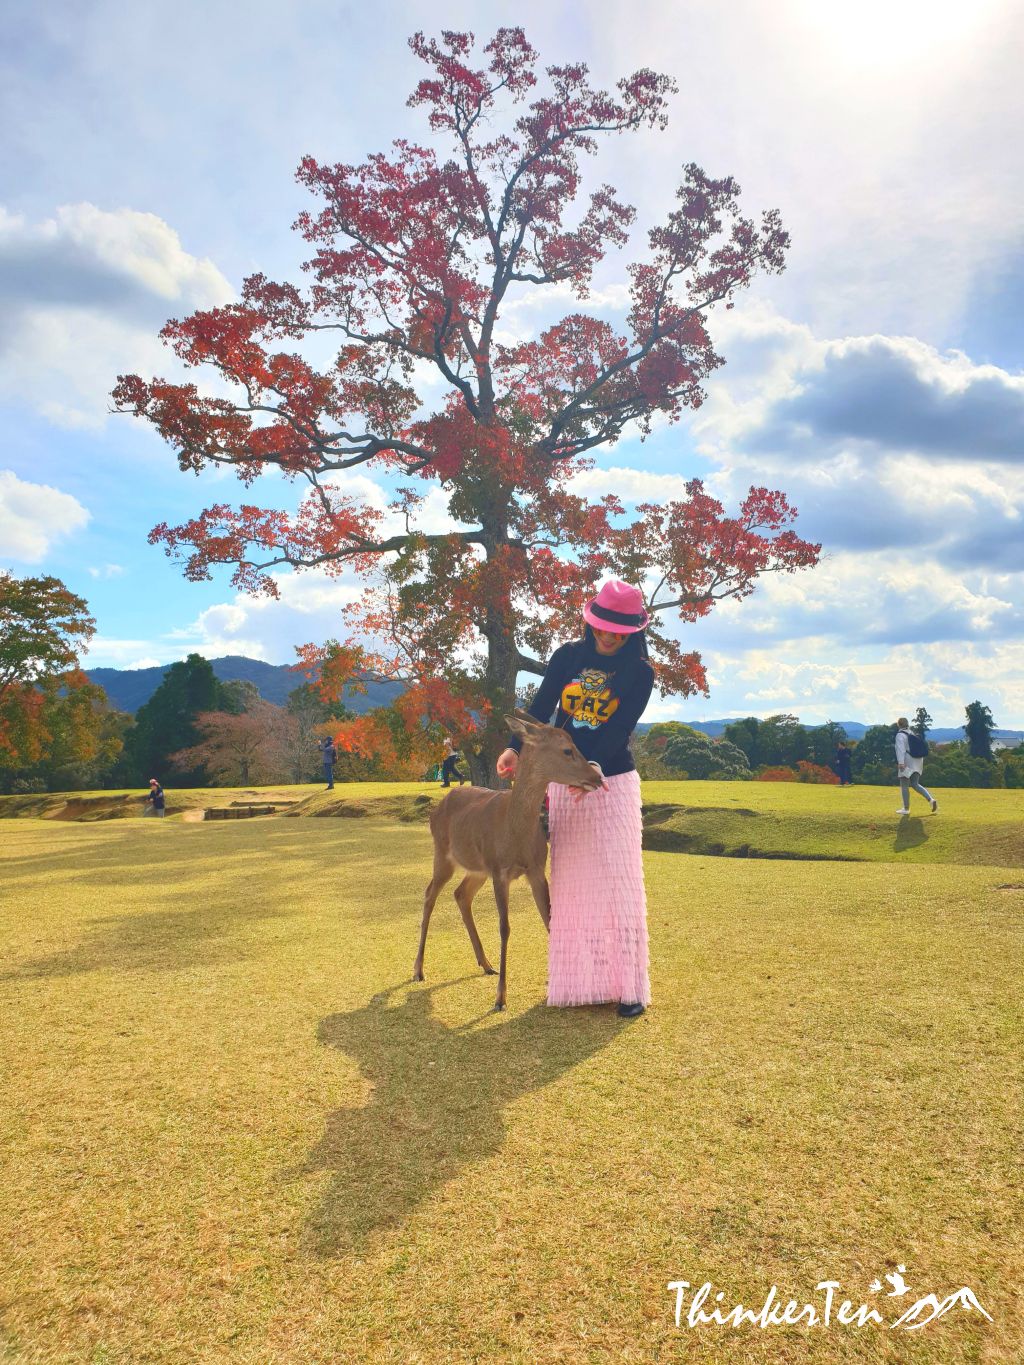 The Bowing Deer at Nara - Top 14 Things you need to know before you visit Nara Park!